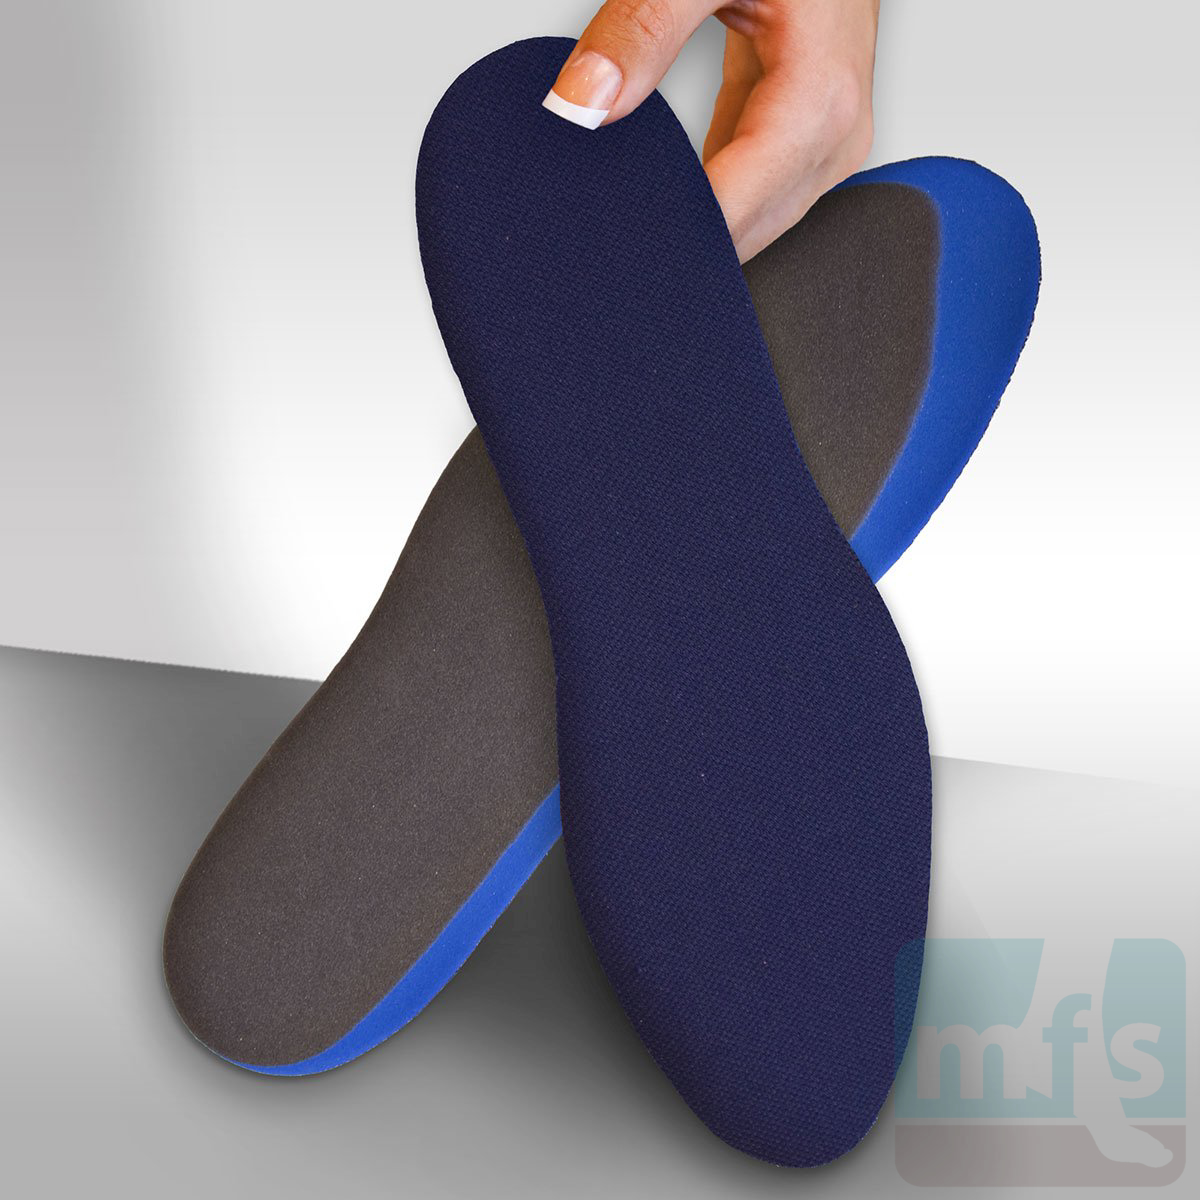 Rubber Heel Lifts for Sale  Orthopedic Shoe Lift Inserts